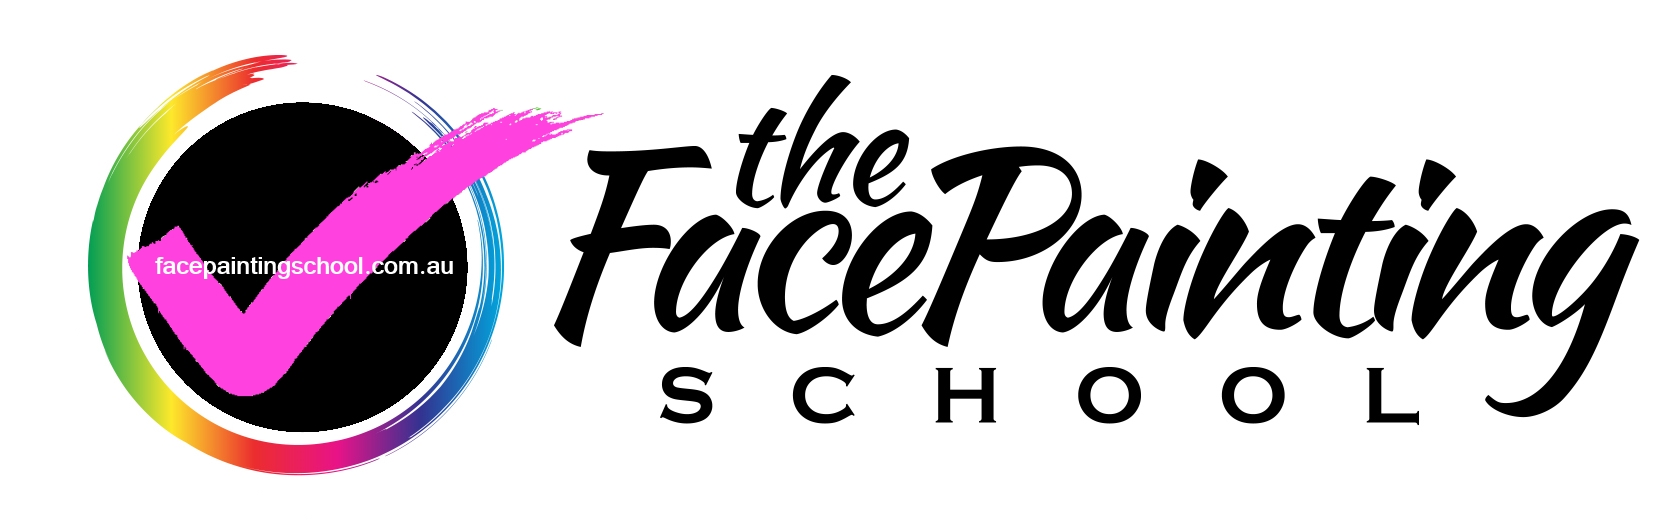 fps-logo-final-april-2014-jpeg.jpg